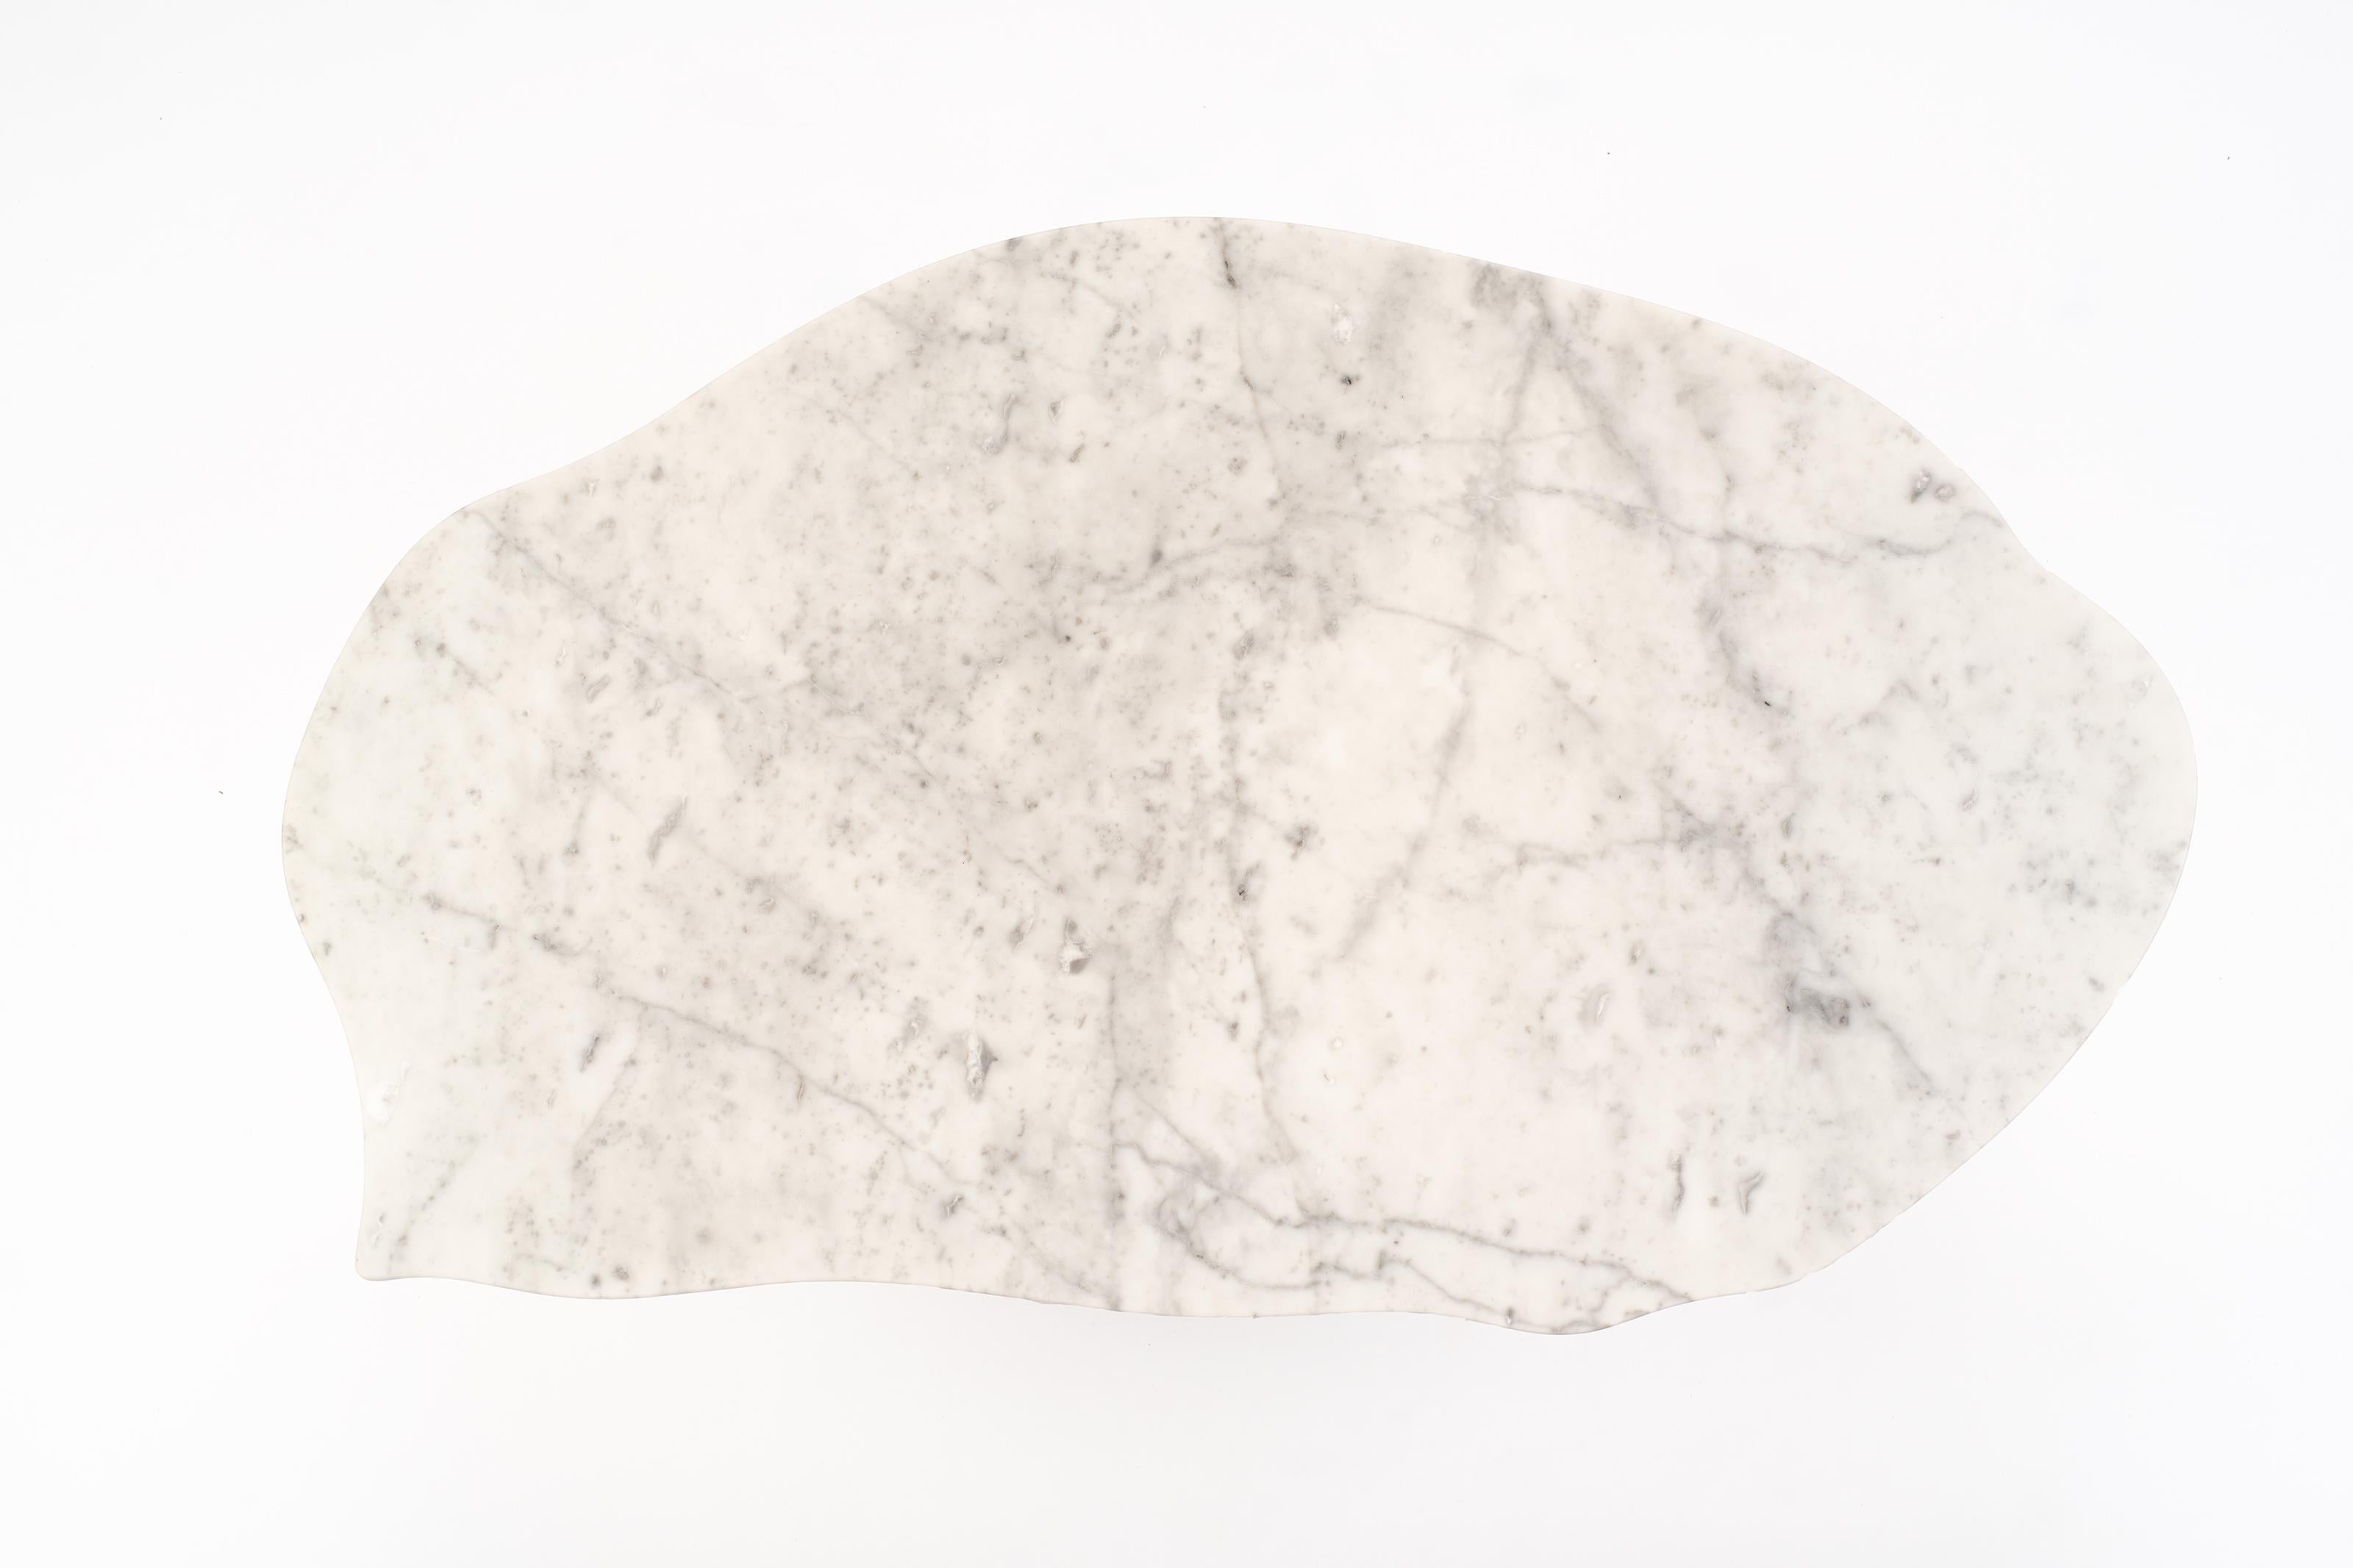 Organic Modern Sculptural White Marble Table, Lorenzo Bini